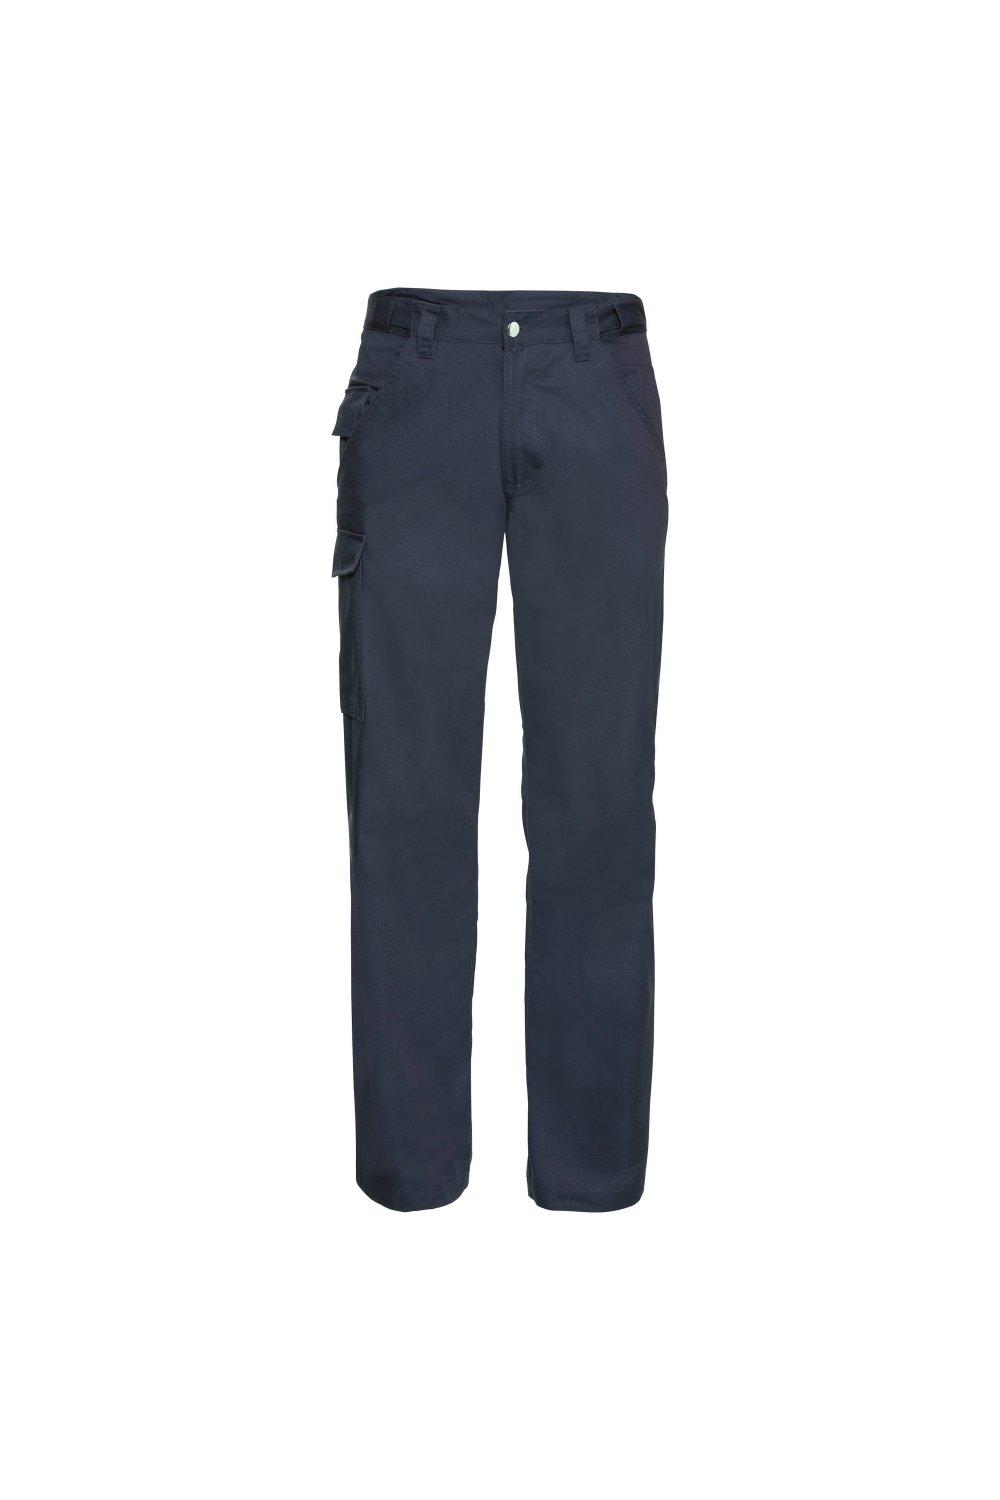 Workwear Polycotton Twill Trouser Pants (Long)